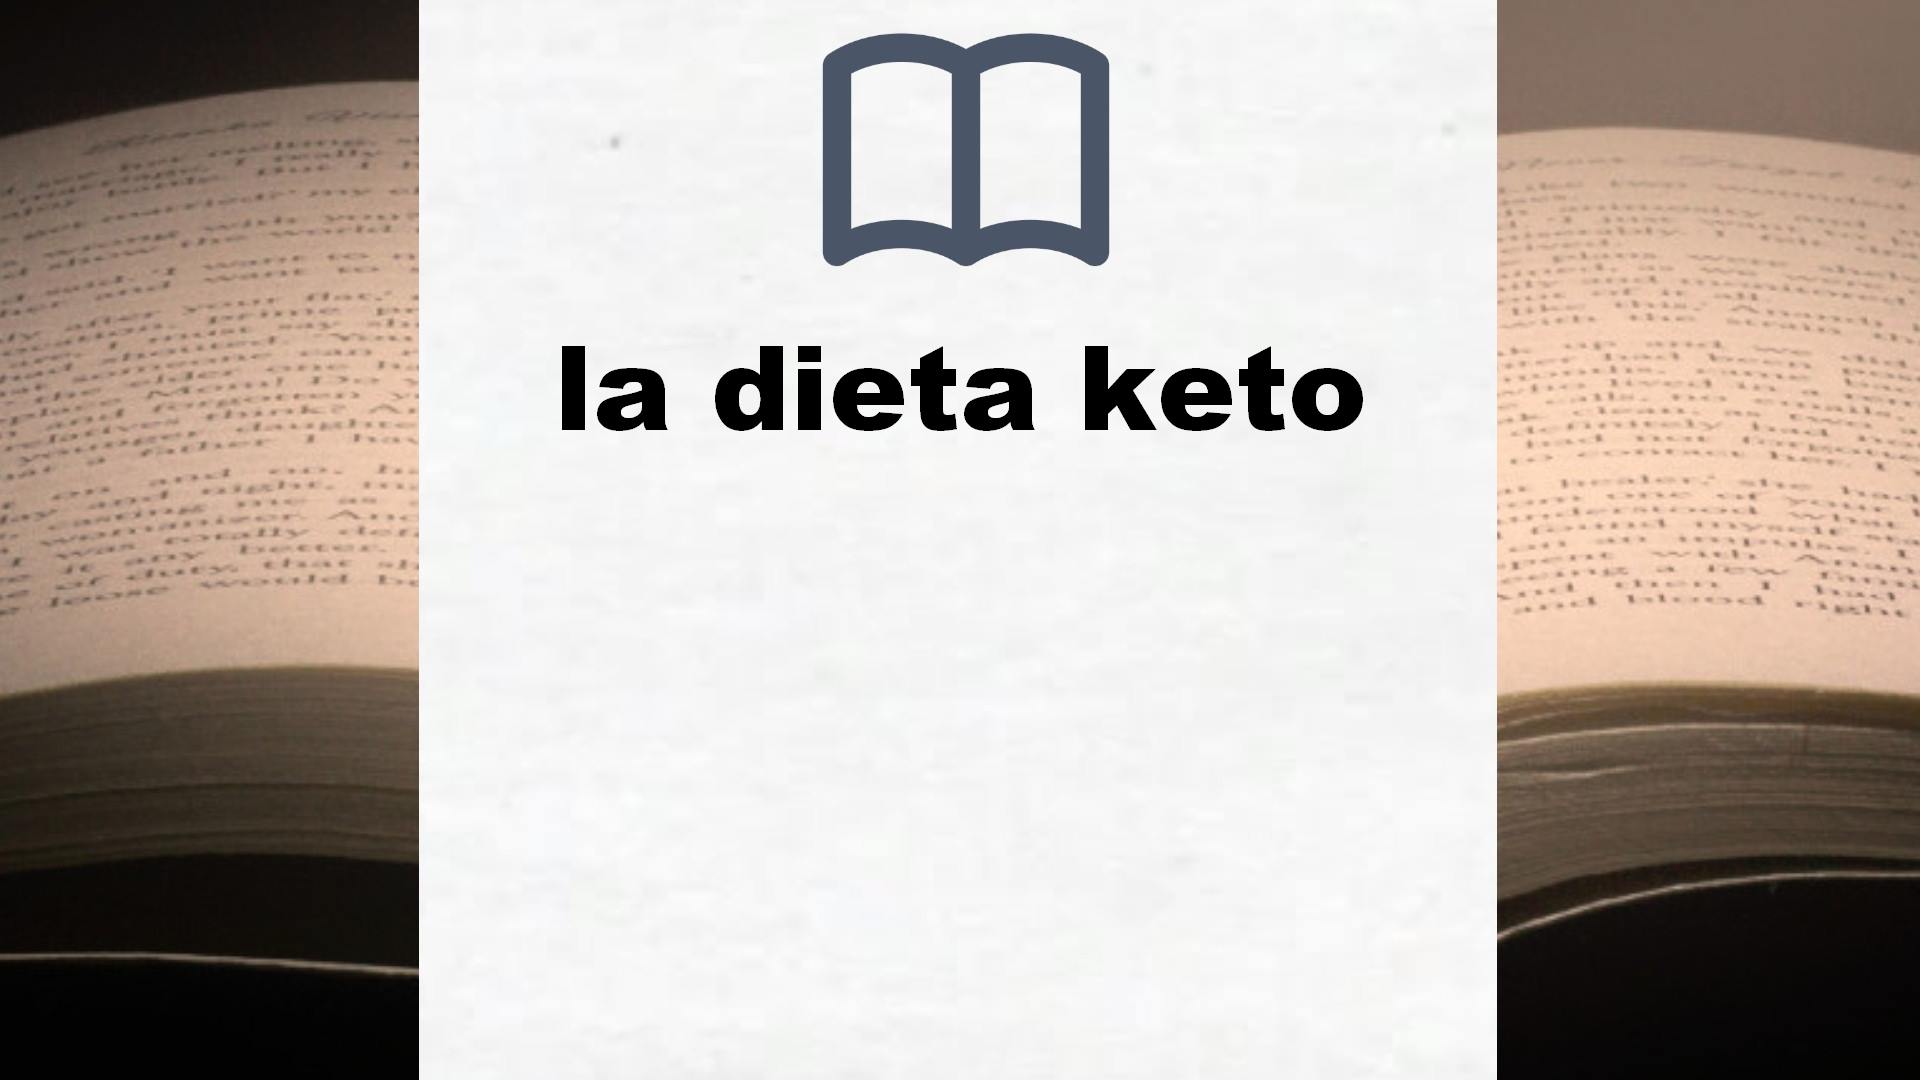 Libros sobre la dieta keto